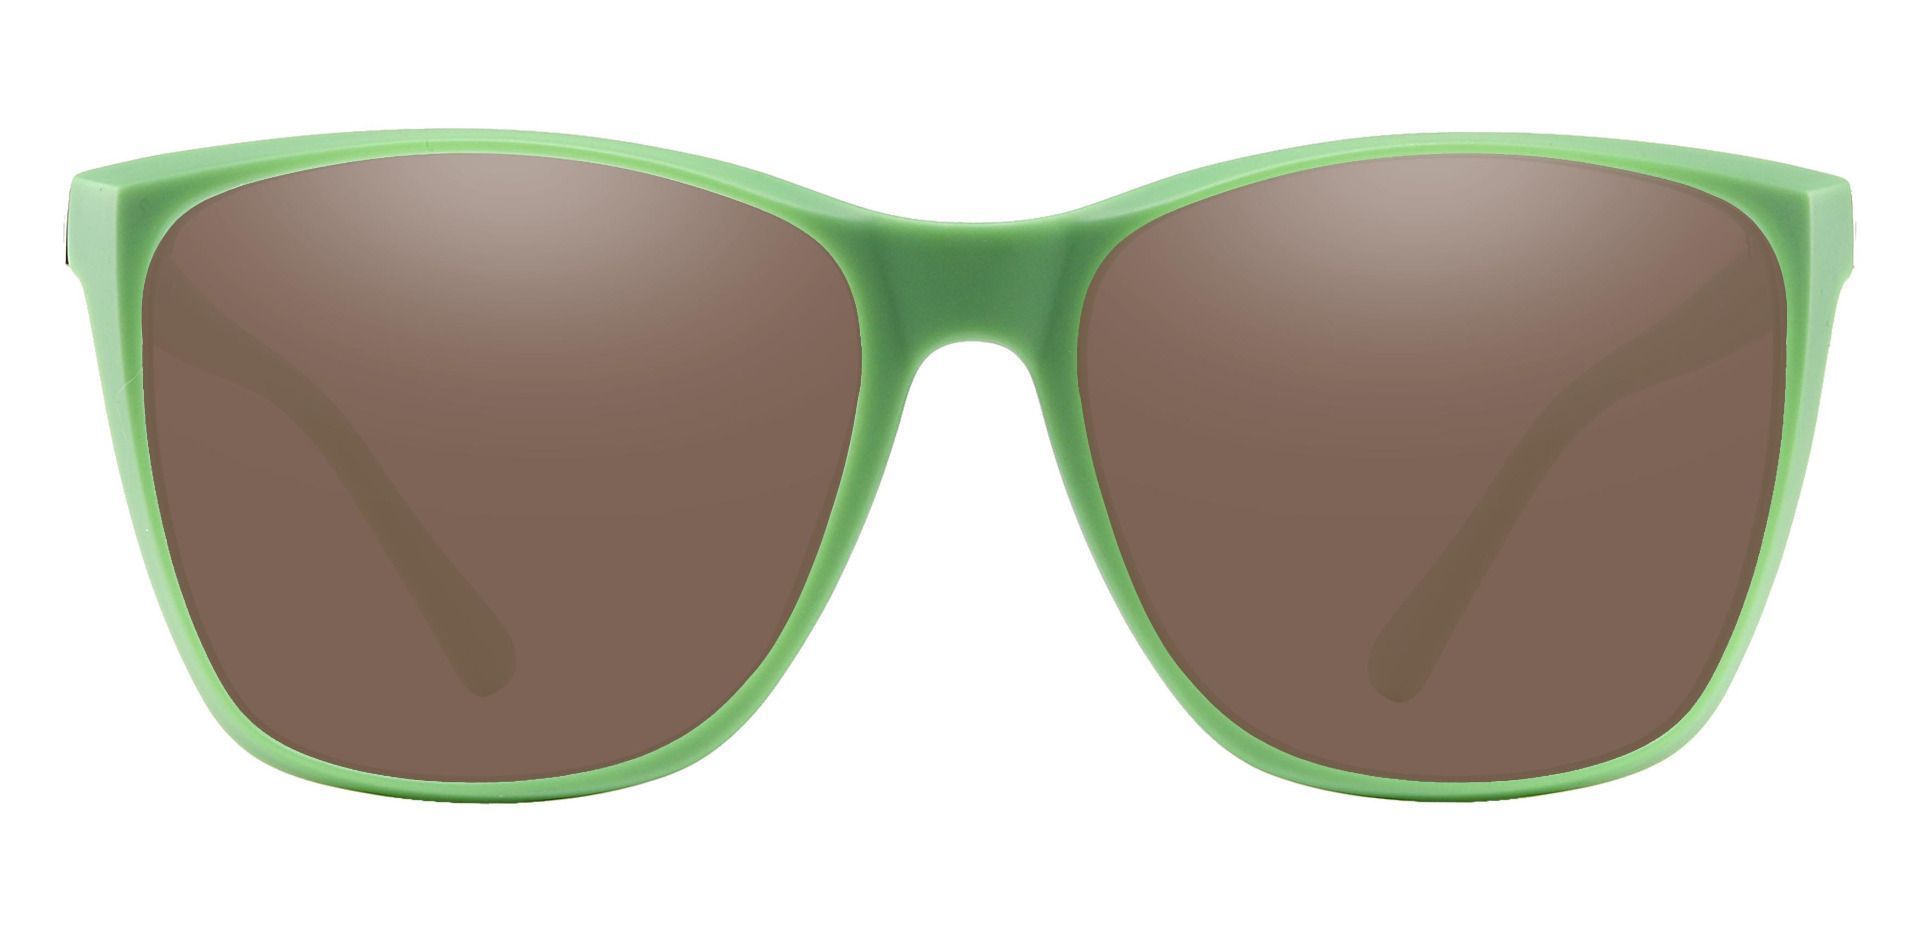 Hickory Square Prescription Sunglasses - Green Frame With Brown Lenses